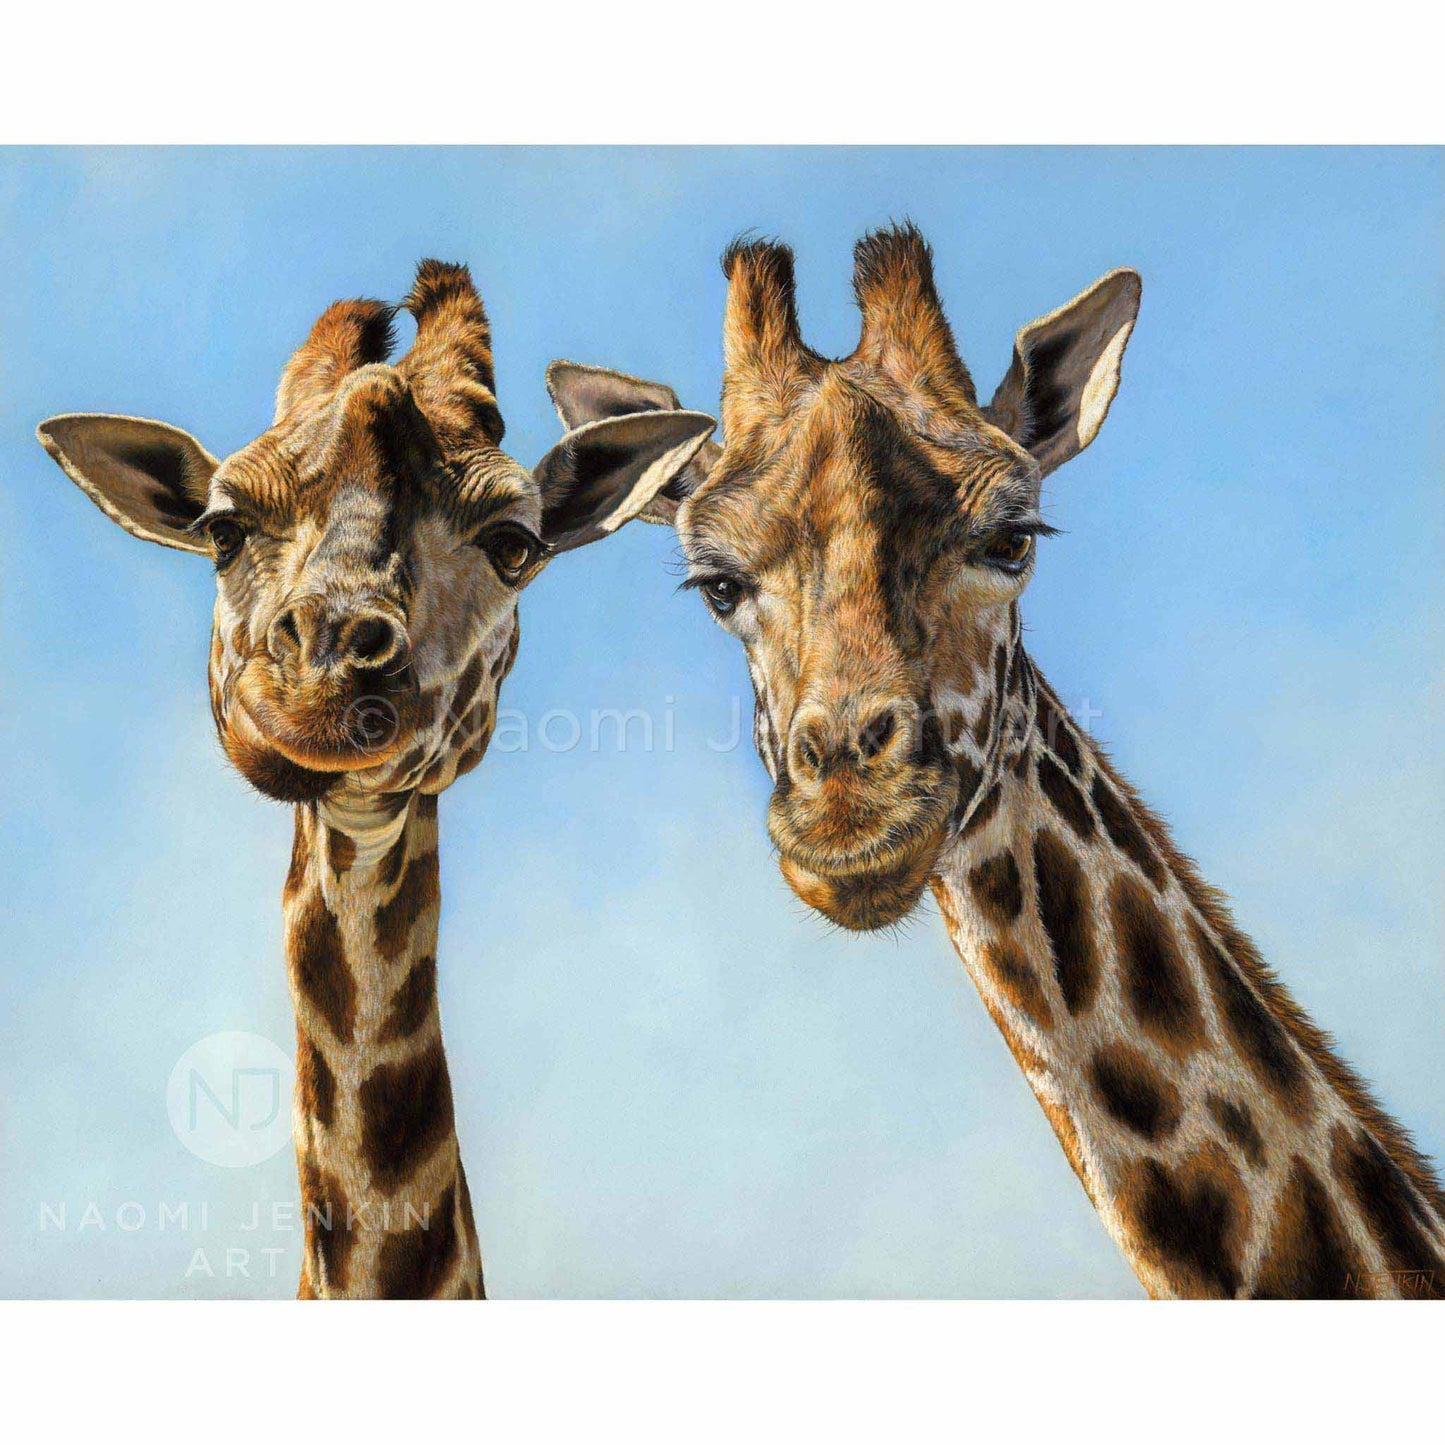 Giraffe painting by wildlife artist Naomi Jenkin.